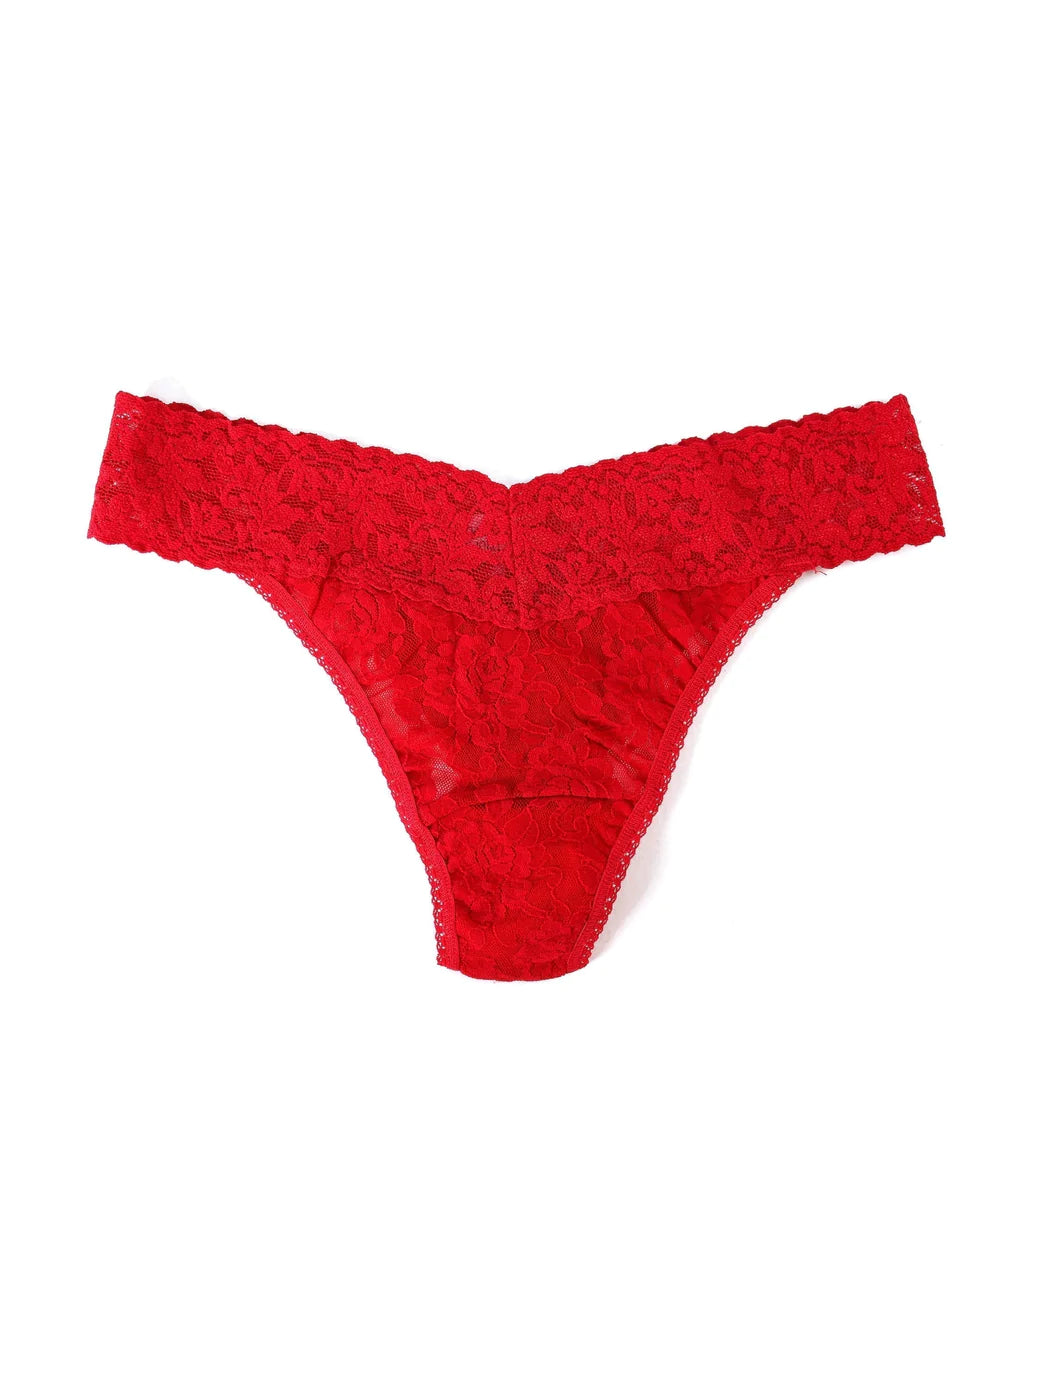 Signature Lace Original Rise Thong - Red - Flirt! Luxe Lingerie & Sleepwear